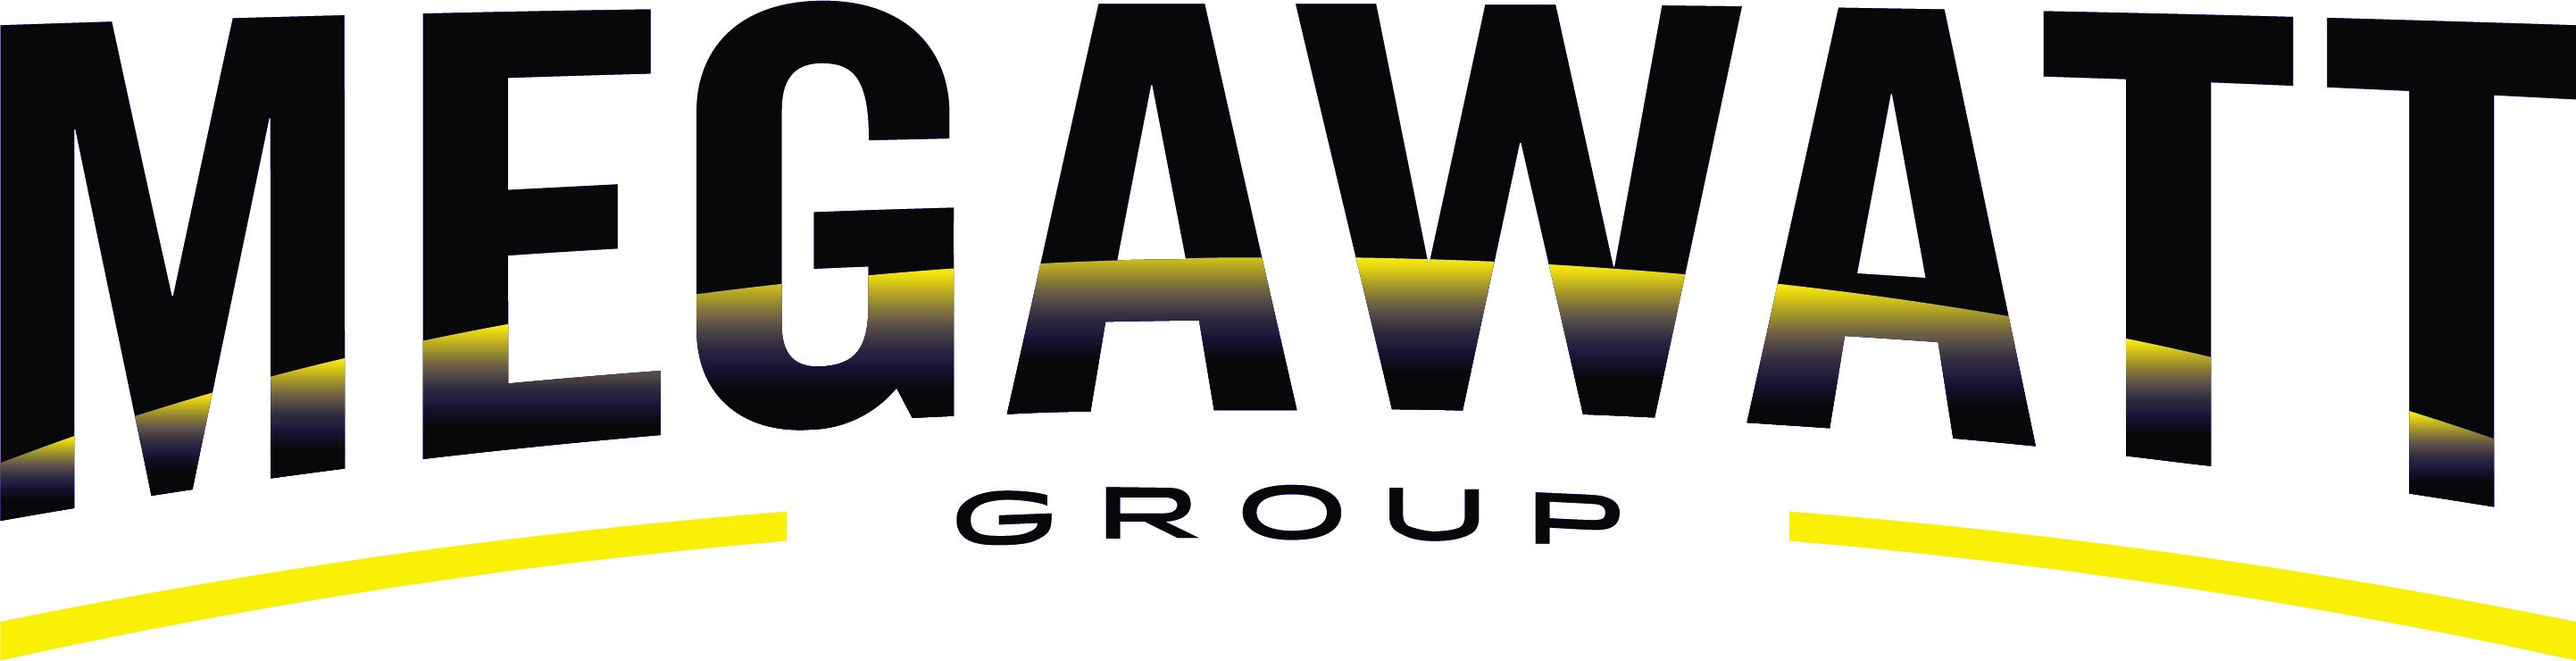 The Megawatt Group's logo